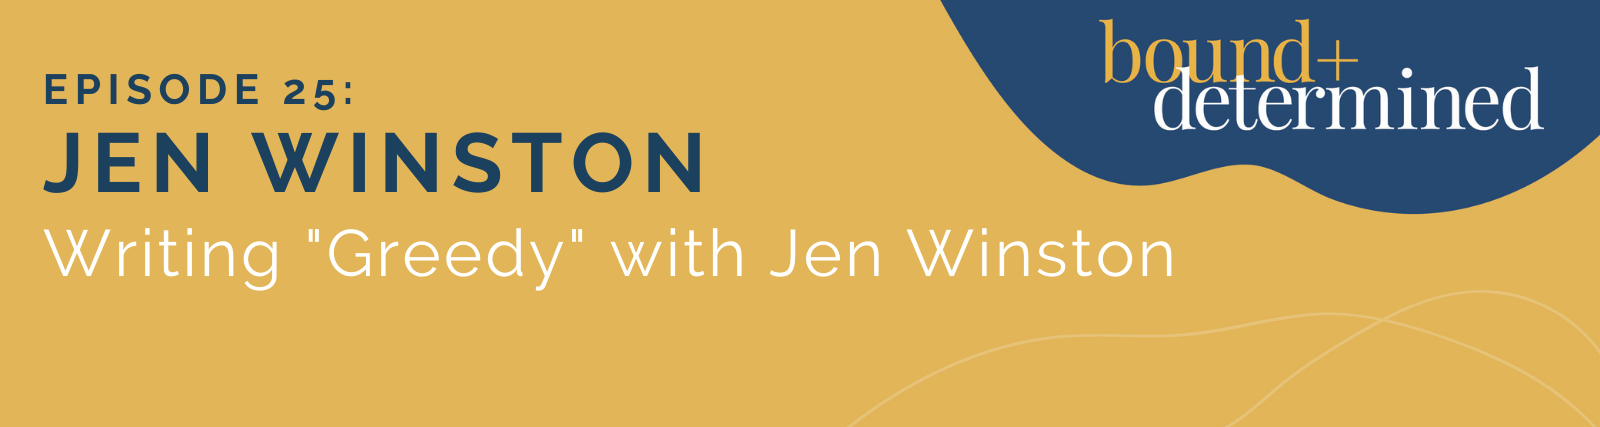 Writing "Greedy" with Jen Winston